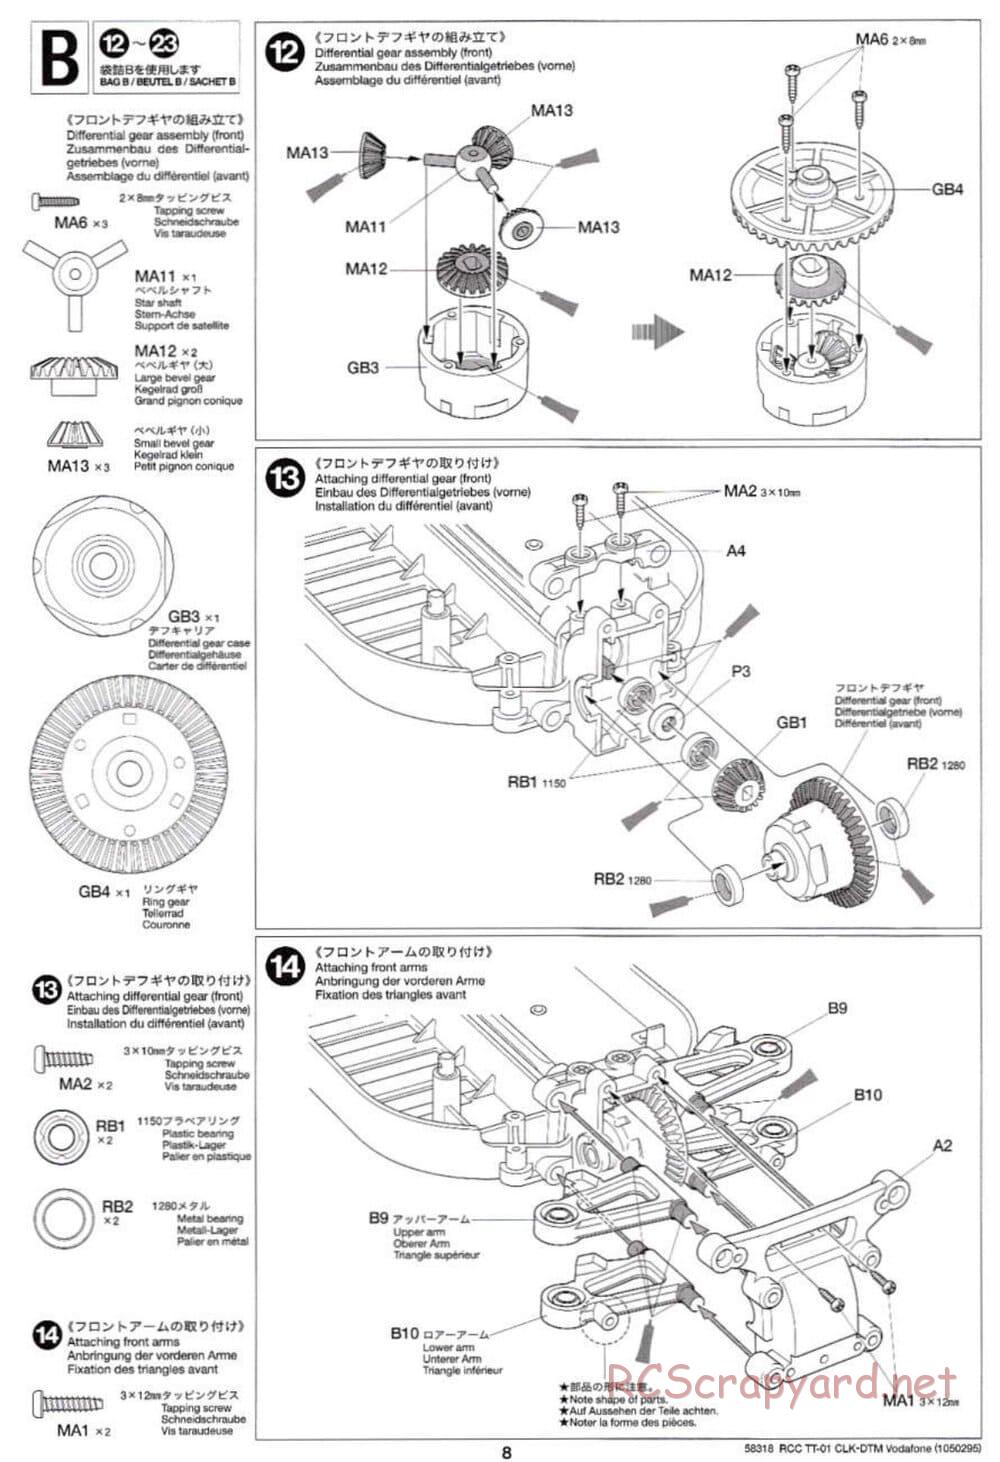 Tamiya - Mercedes-Benz CLK-DTM Team Vodafone AMG-Mercedes - TT-01 Chassis - Manual - Page 8